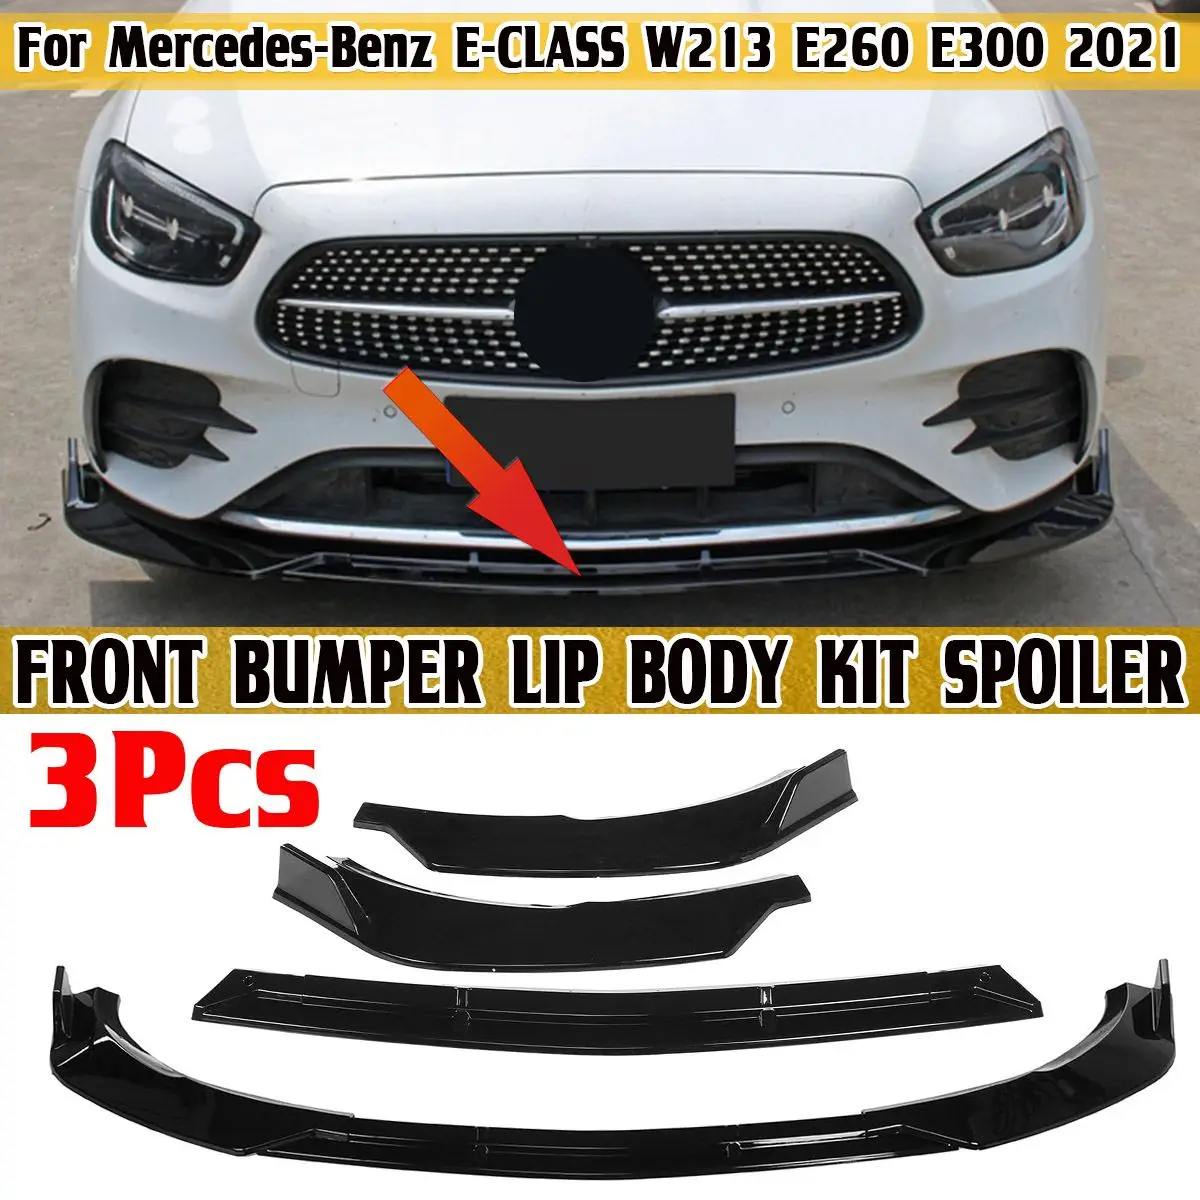 2021 Car Front Bumper Splitter Spoiler Lip Body Kit Diffuser Protector Cover For Mercedes For Benz W213 E Class E260 E300 2021